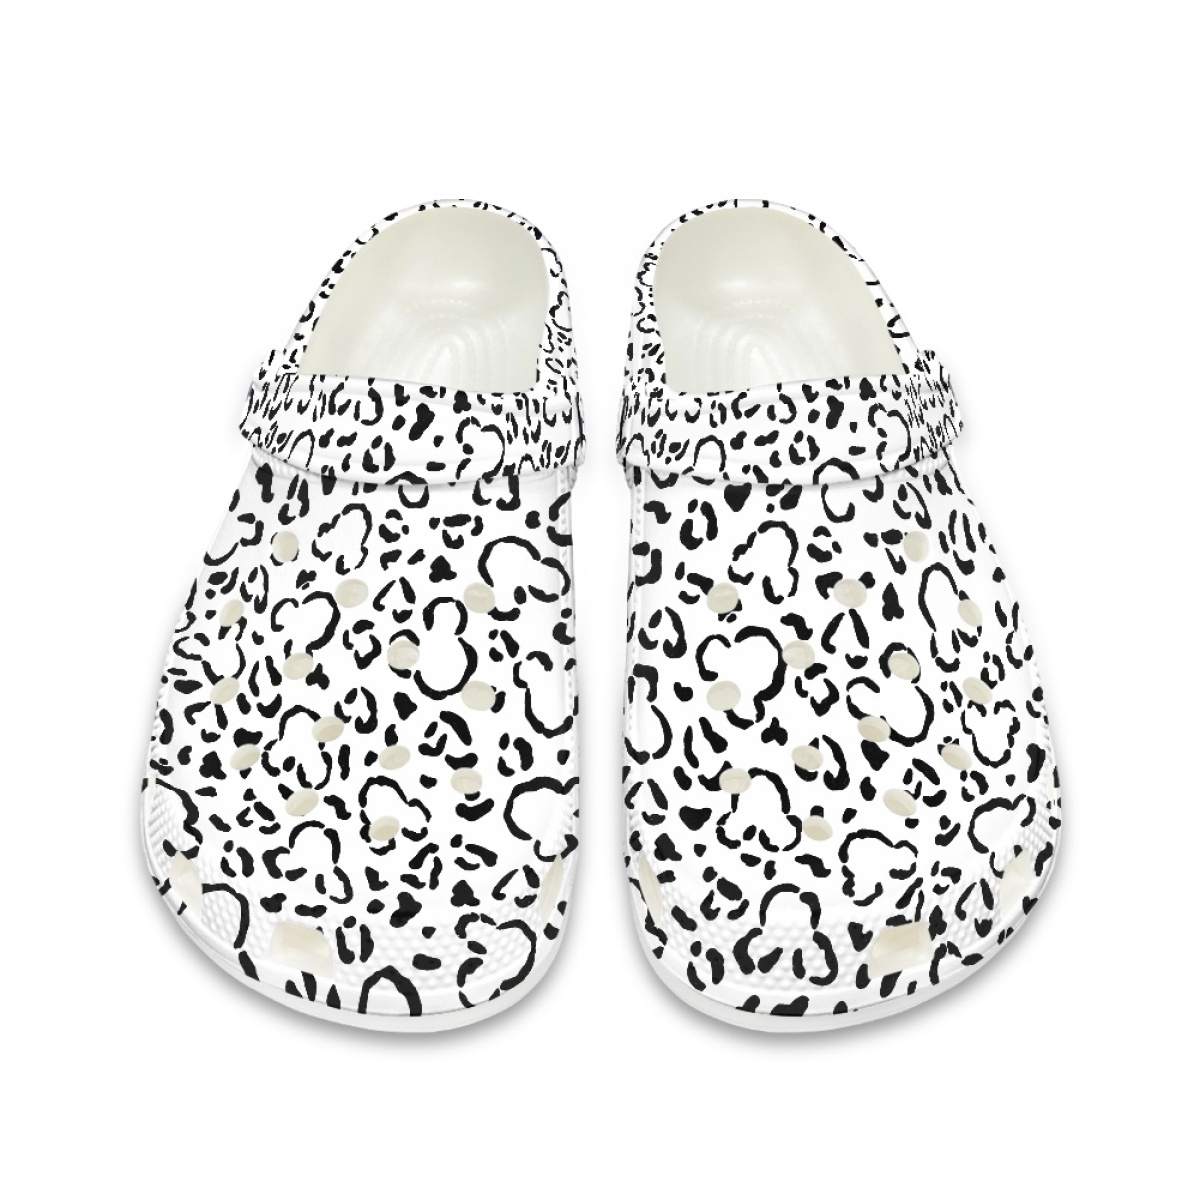 PREORDER Leopard Mouse Women's Shoes